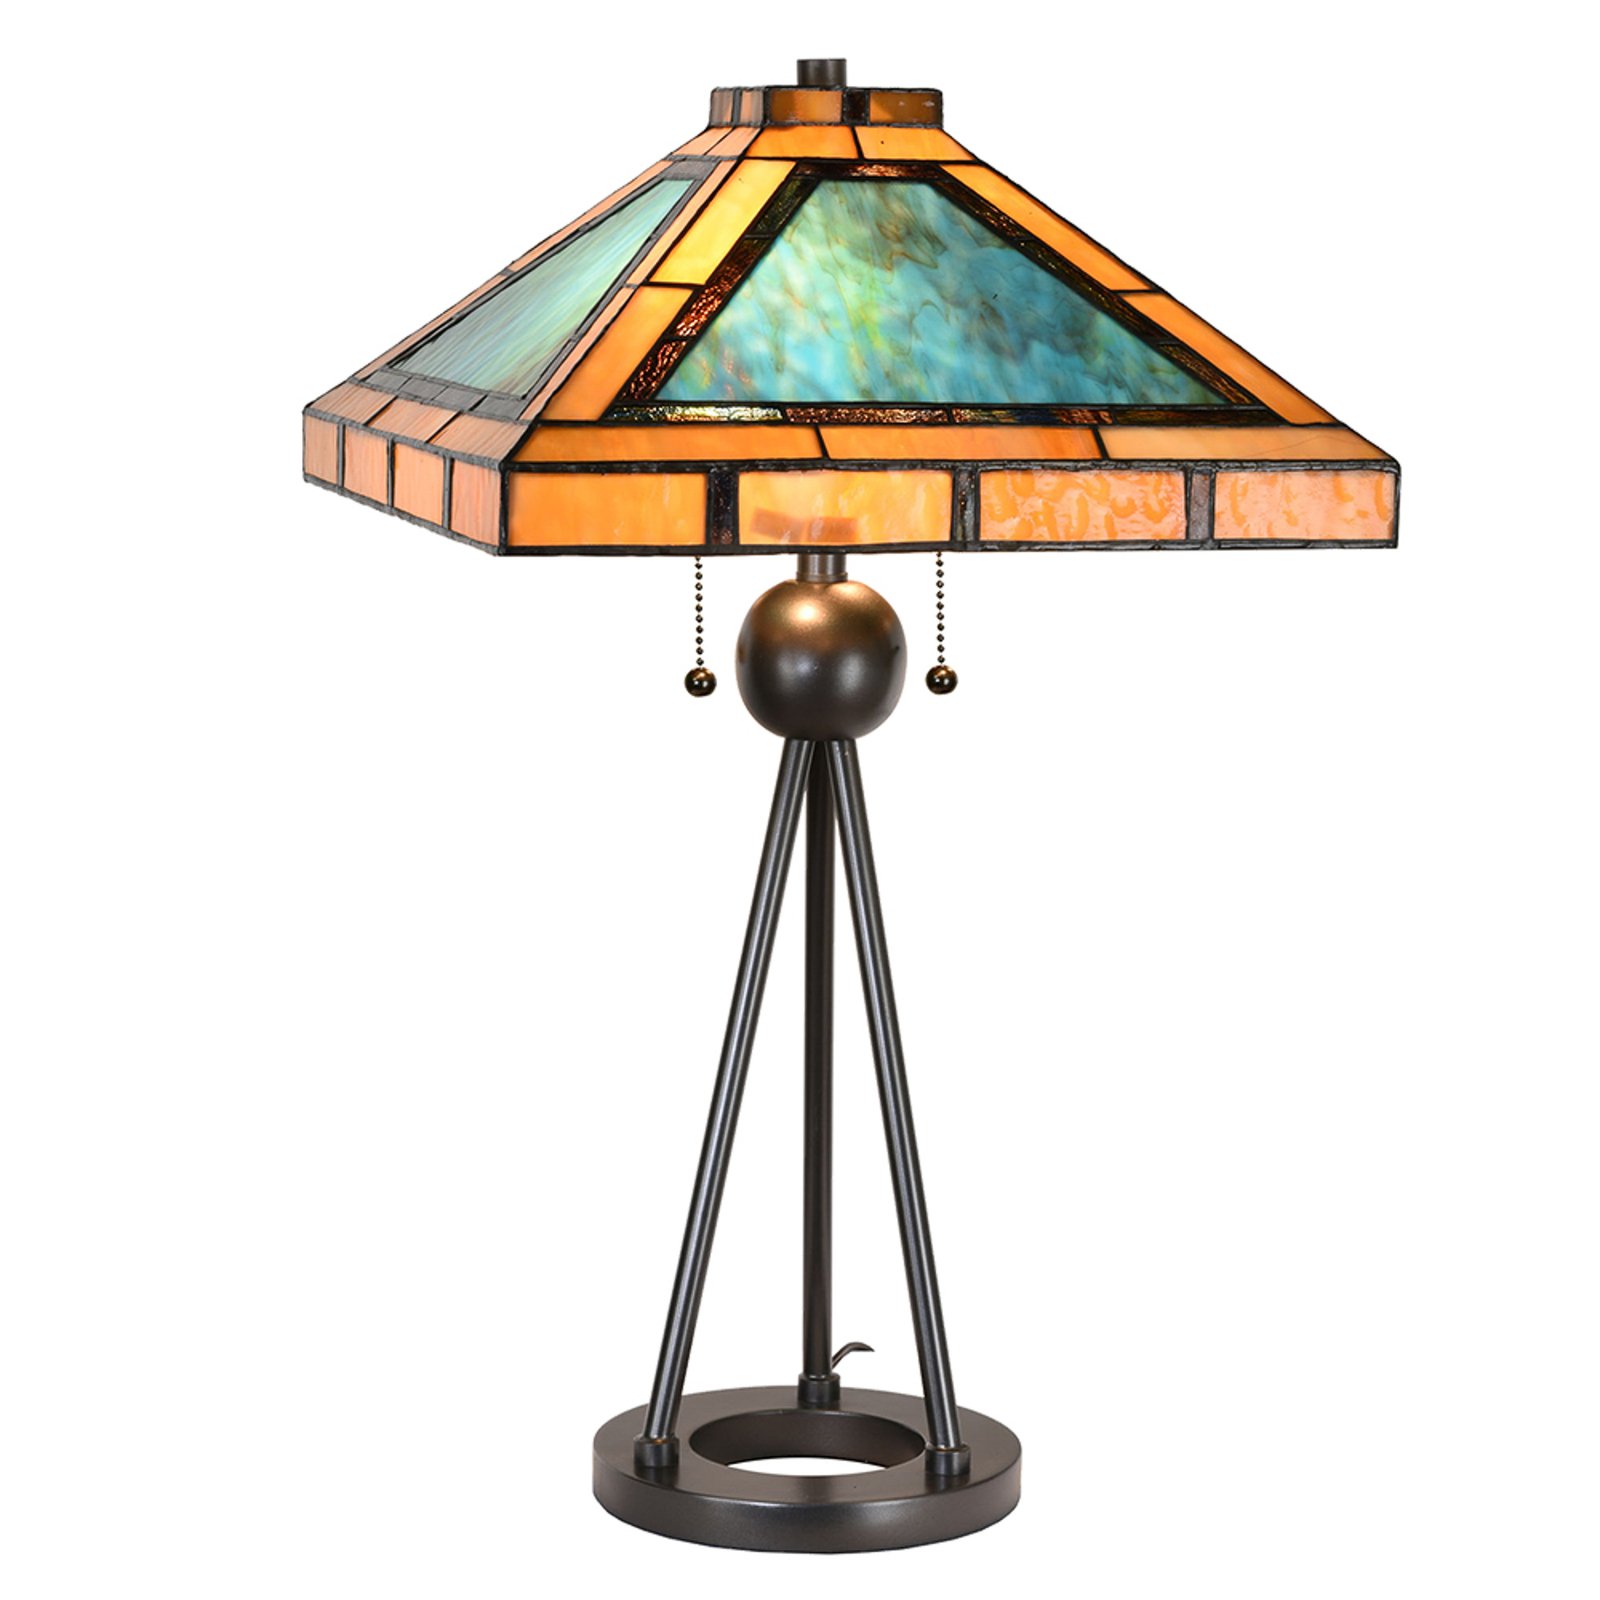 5LL-6164 table lamp, Tiffany design green/brown